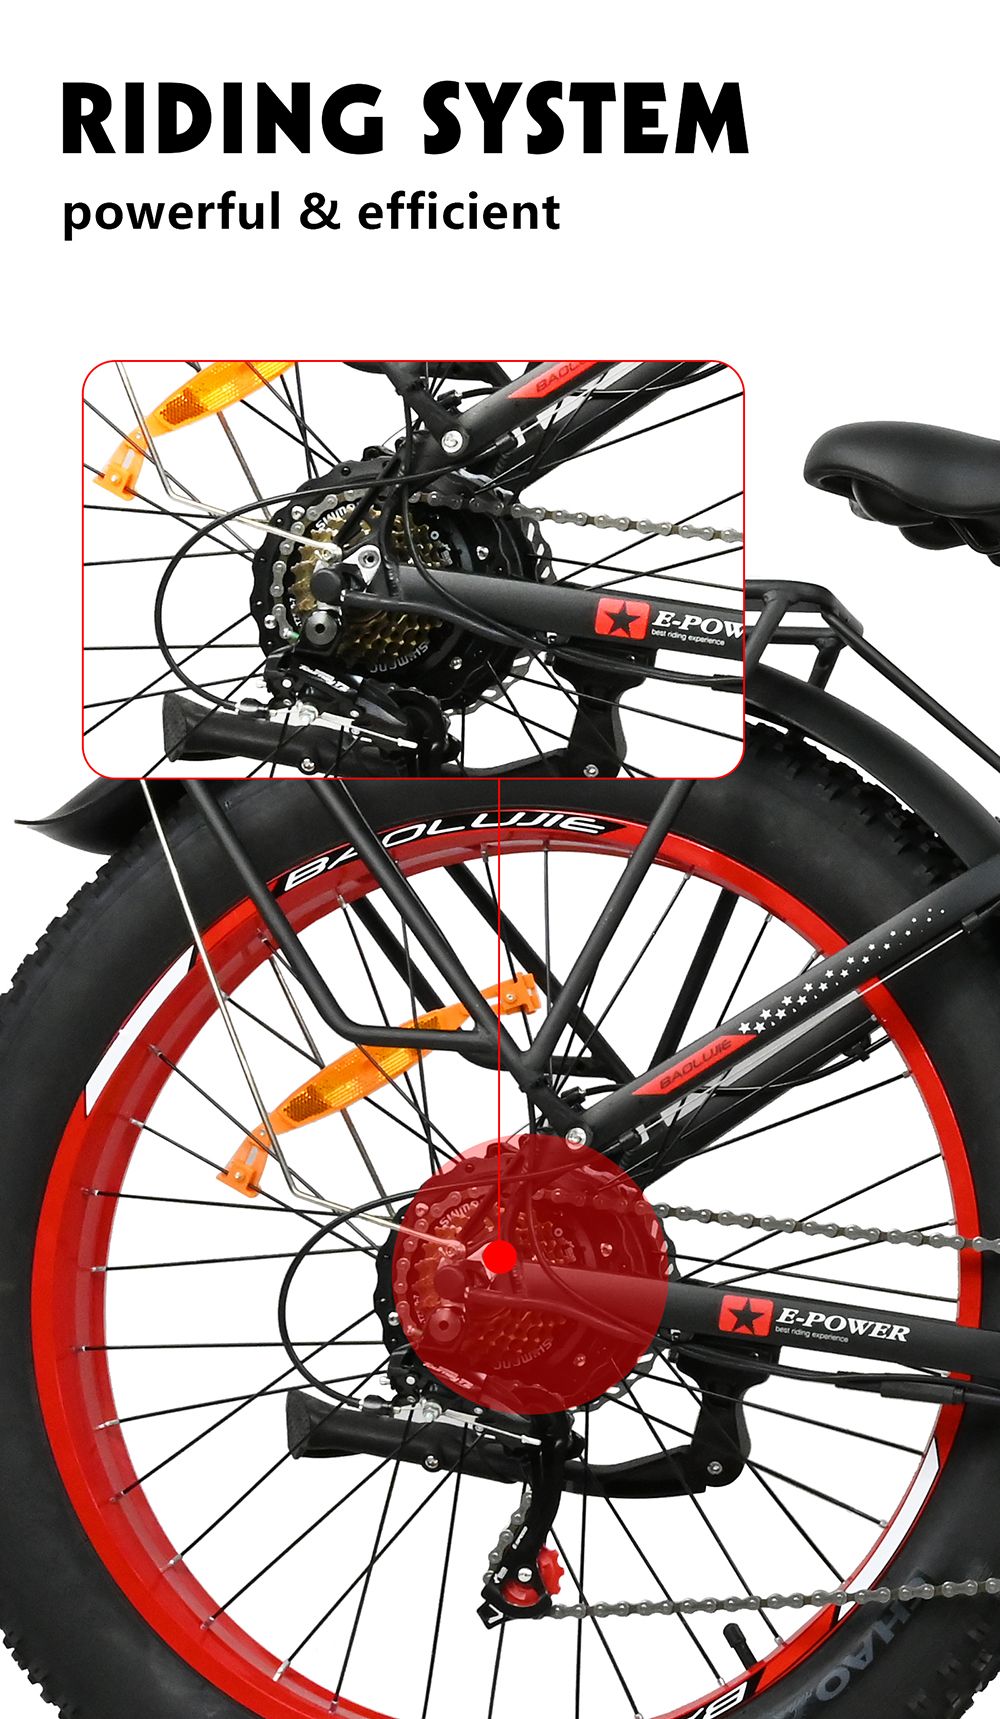 BAOLUJIE DP2619 Bicicleta eléctrica, neumático grueso de 26 * 4.0 pulgadas Motor de 750 W Batería de 48 V 13 Ah Velocidad máxima de 45 km / h Alcance máximo de 45 km Pantalla LCD SHIMANO de 7 velocidades - Negro